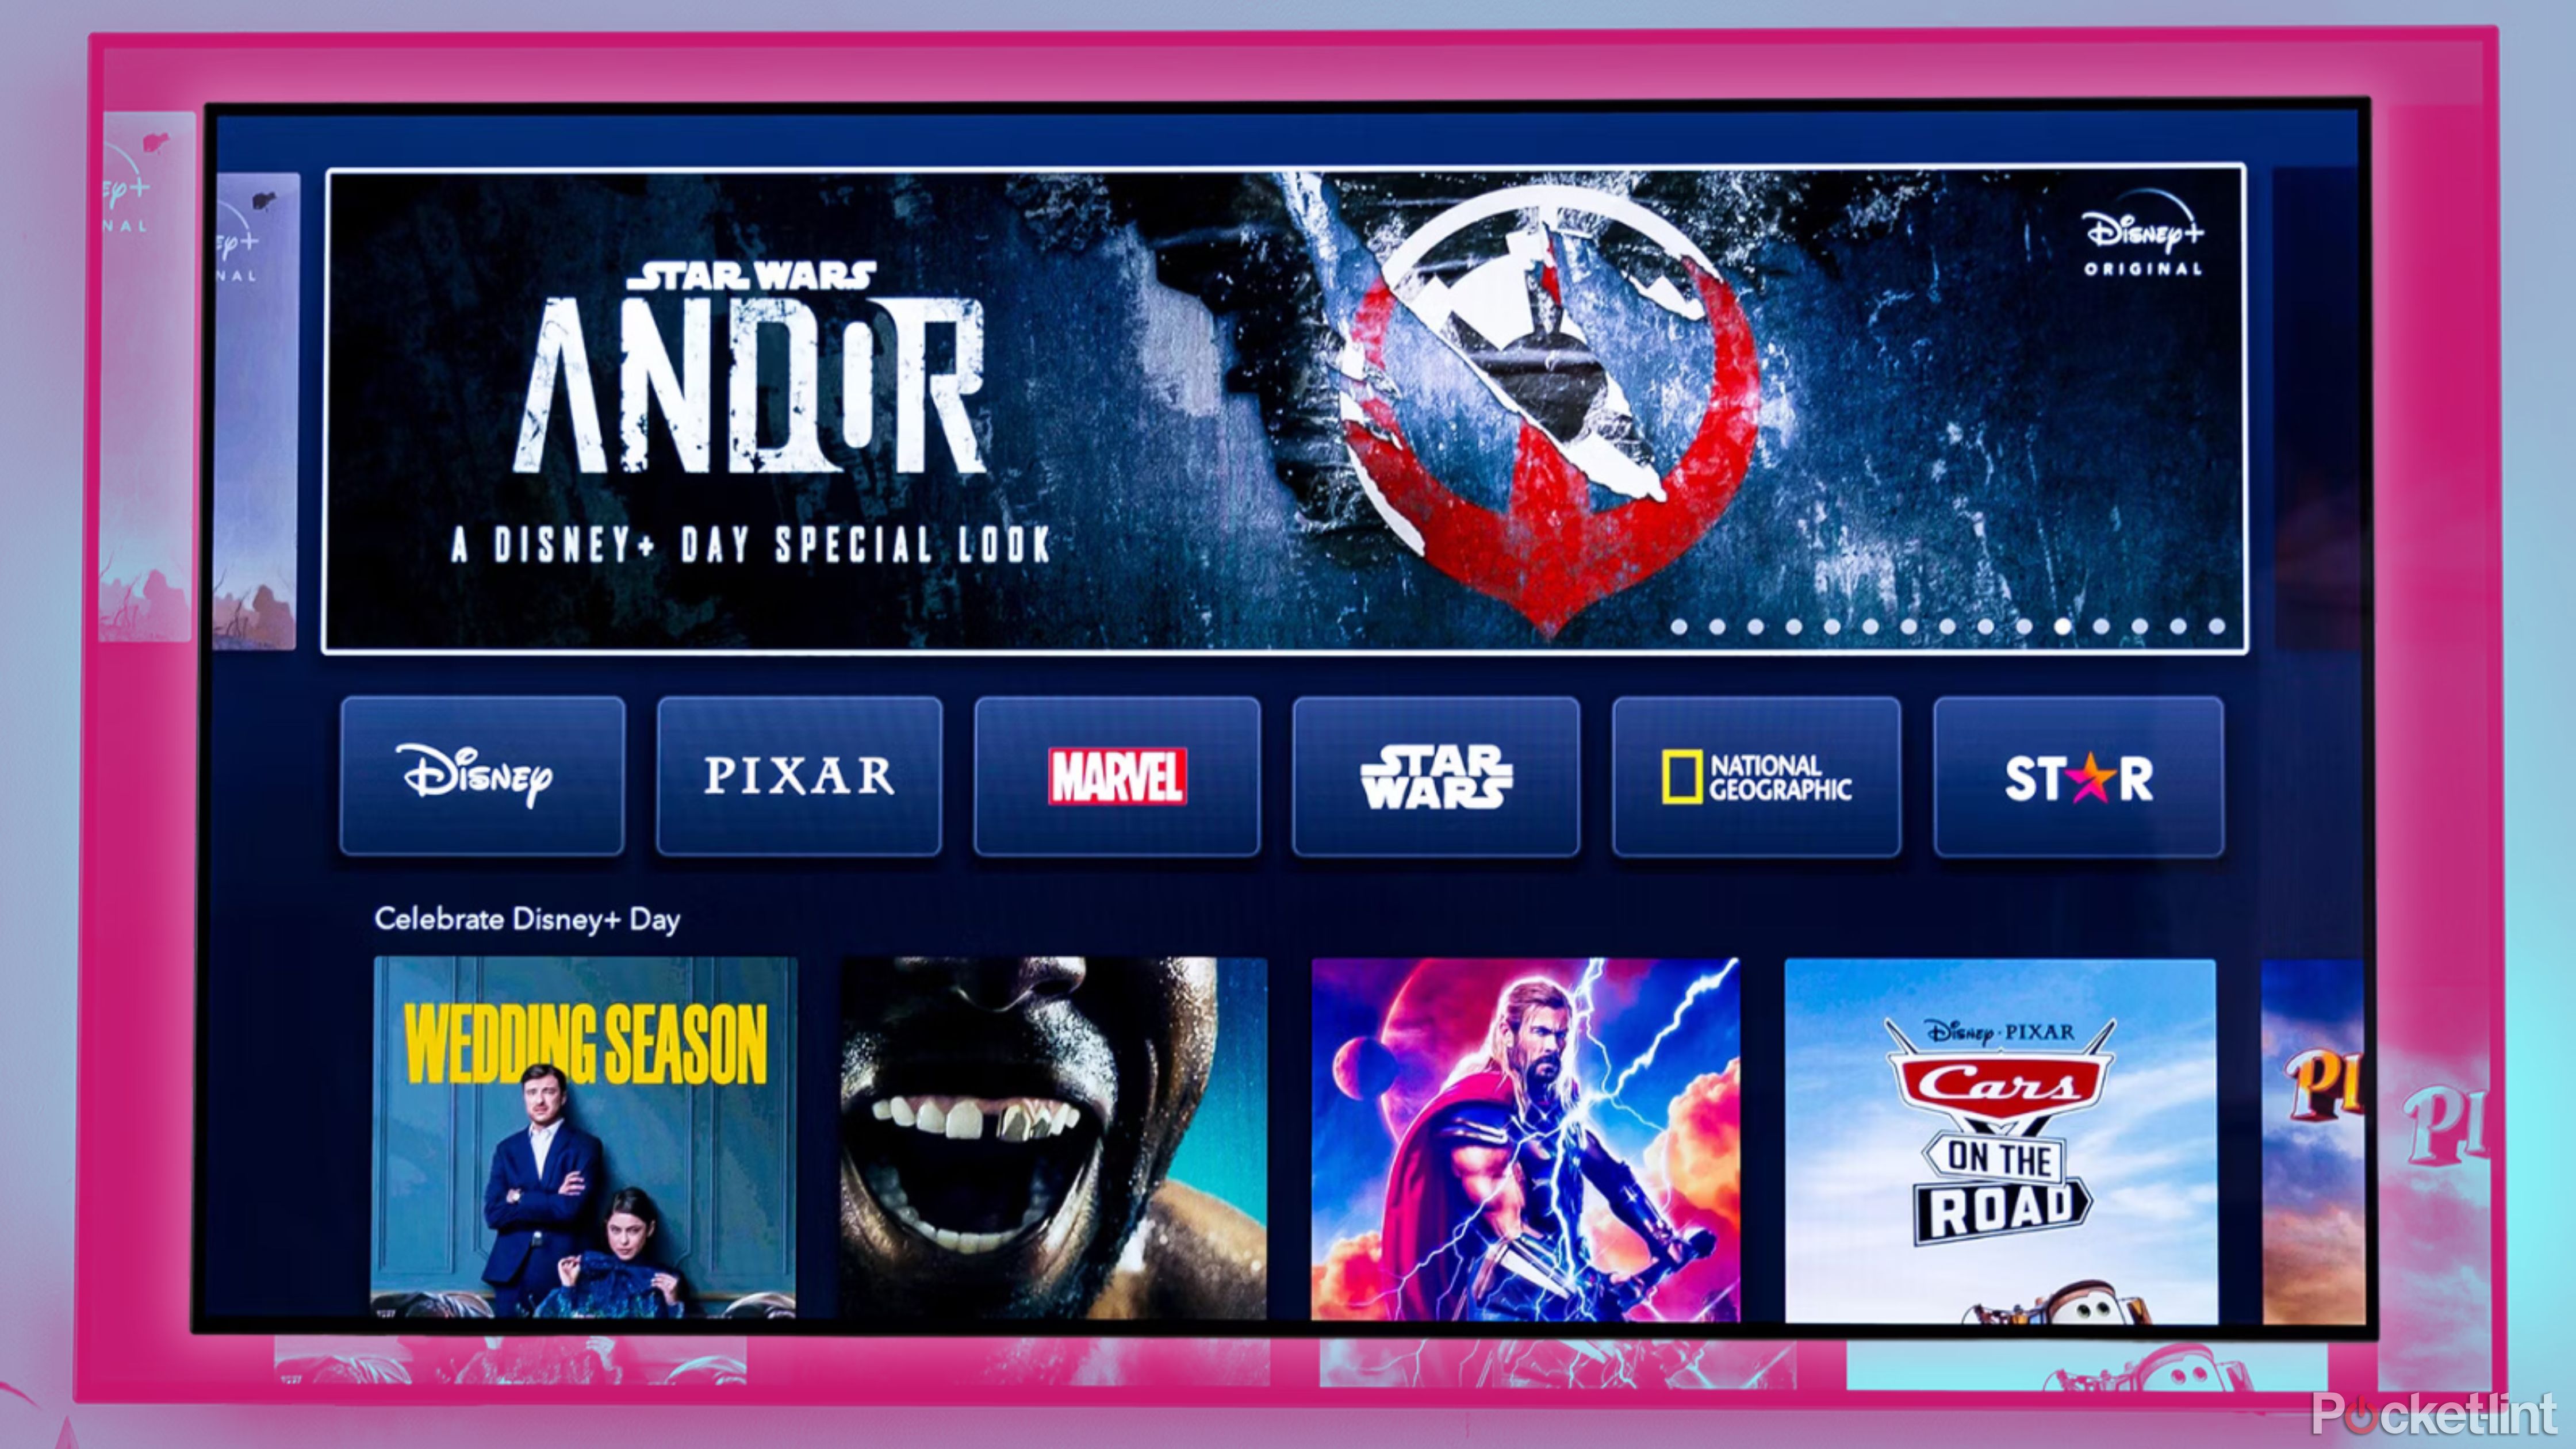 Disney+ homepage on a TV